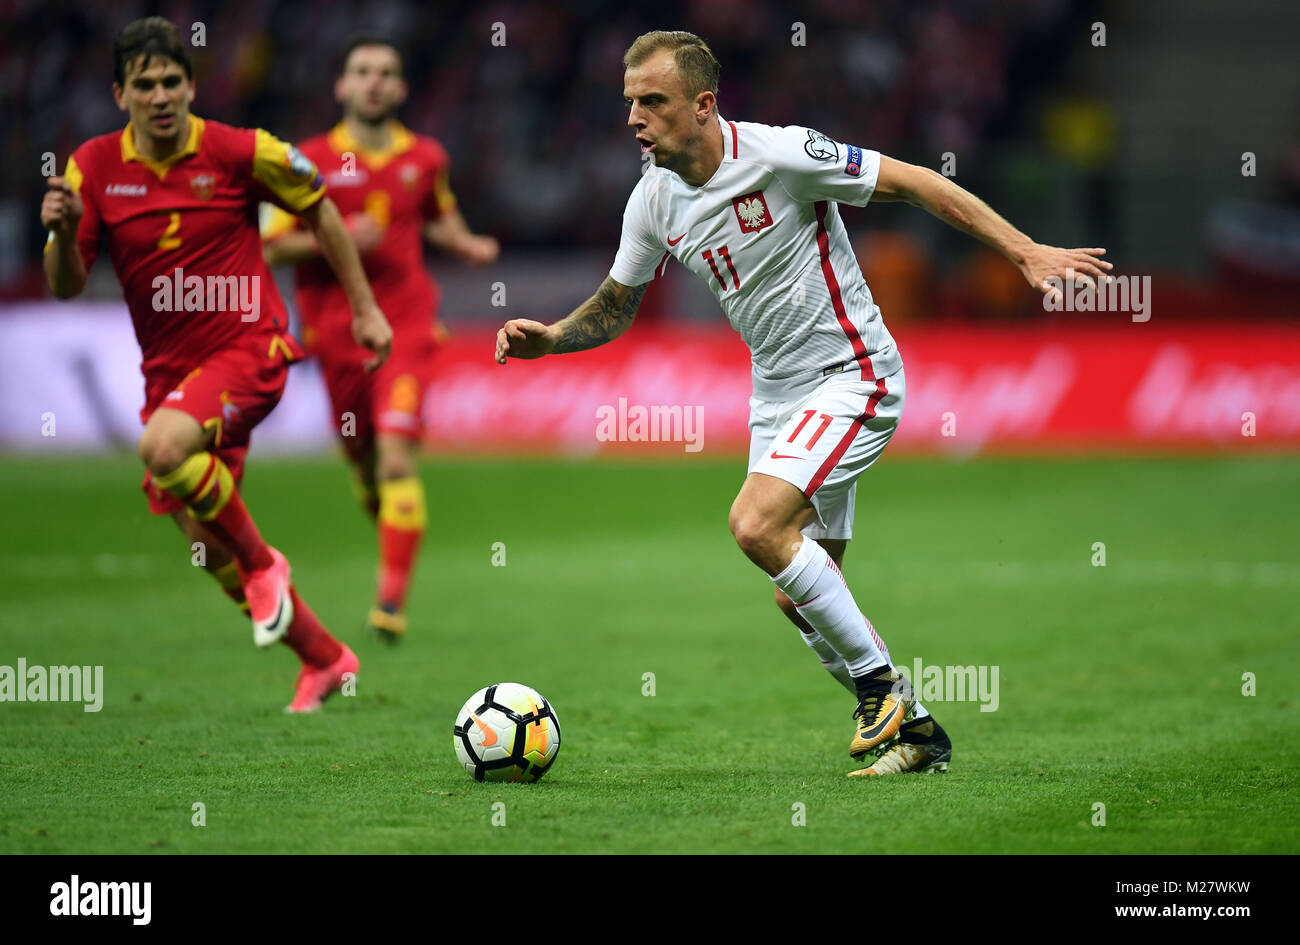 8 Oktober, 2017 - Warschau, Polen: Fußball WM 2018 Qualifikation Rusia Polen - Montenegro o/p Kamil Grosicki (Polen) Stockfoto